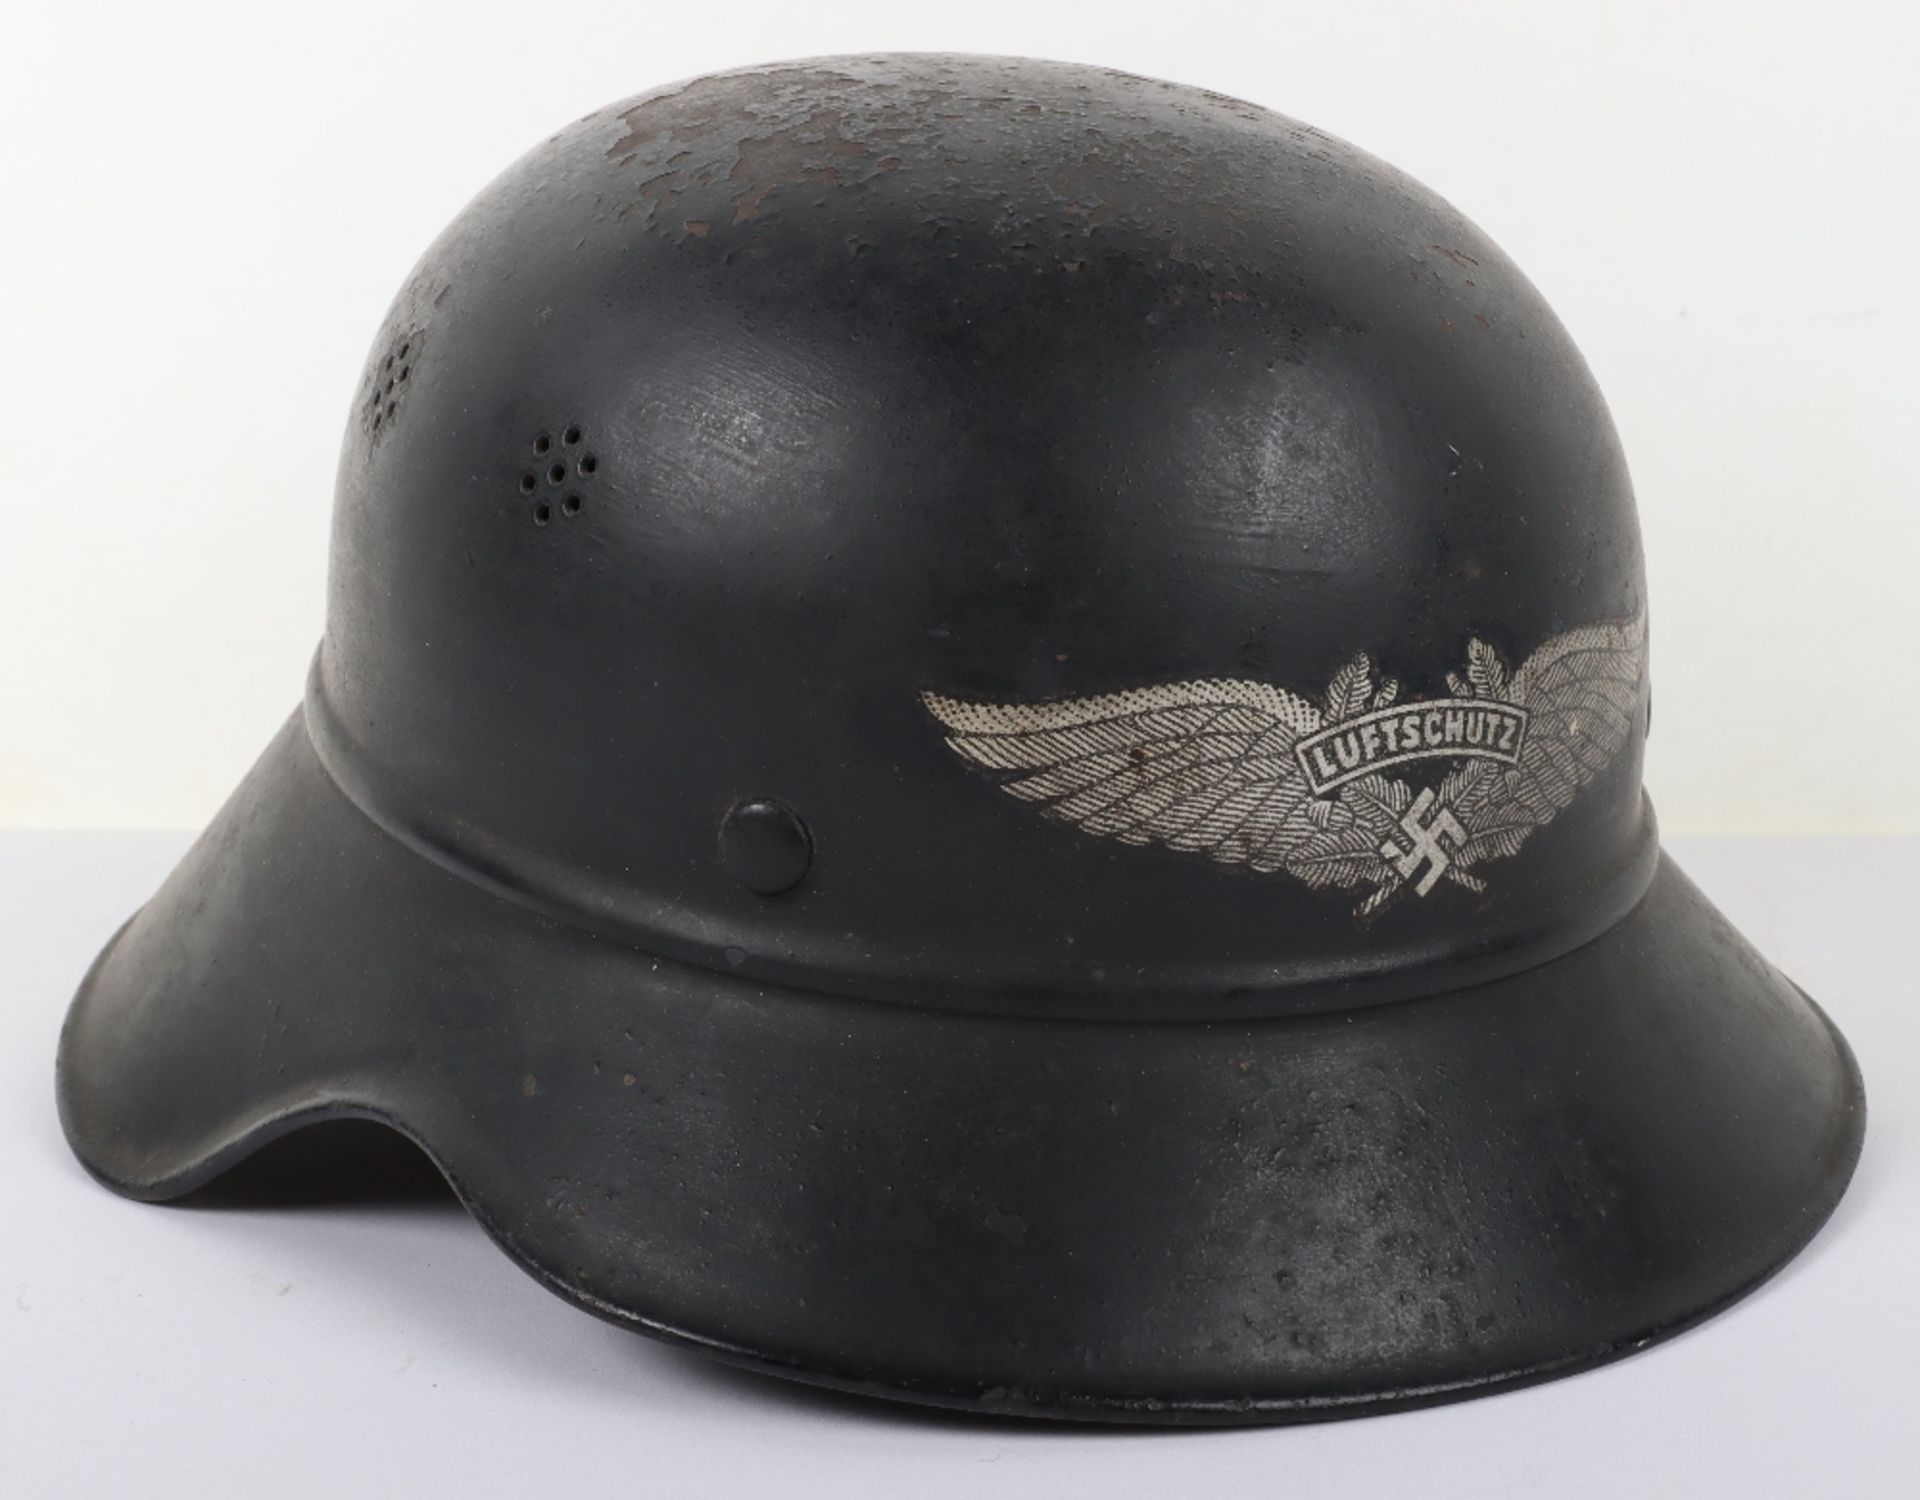 WW2 German Luftschutz (Air Defence) Steel Helmet,